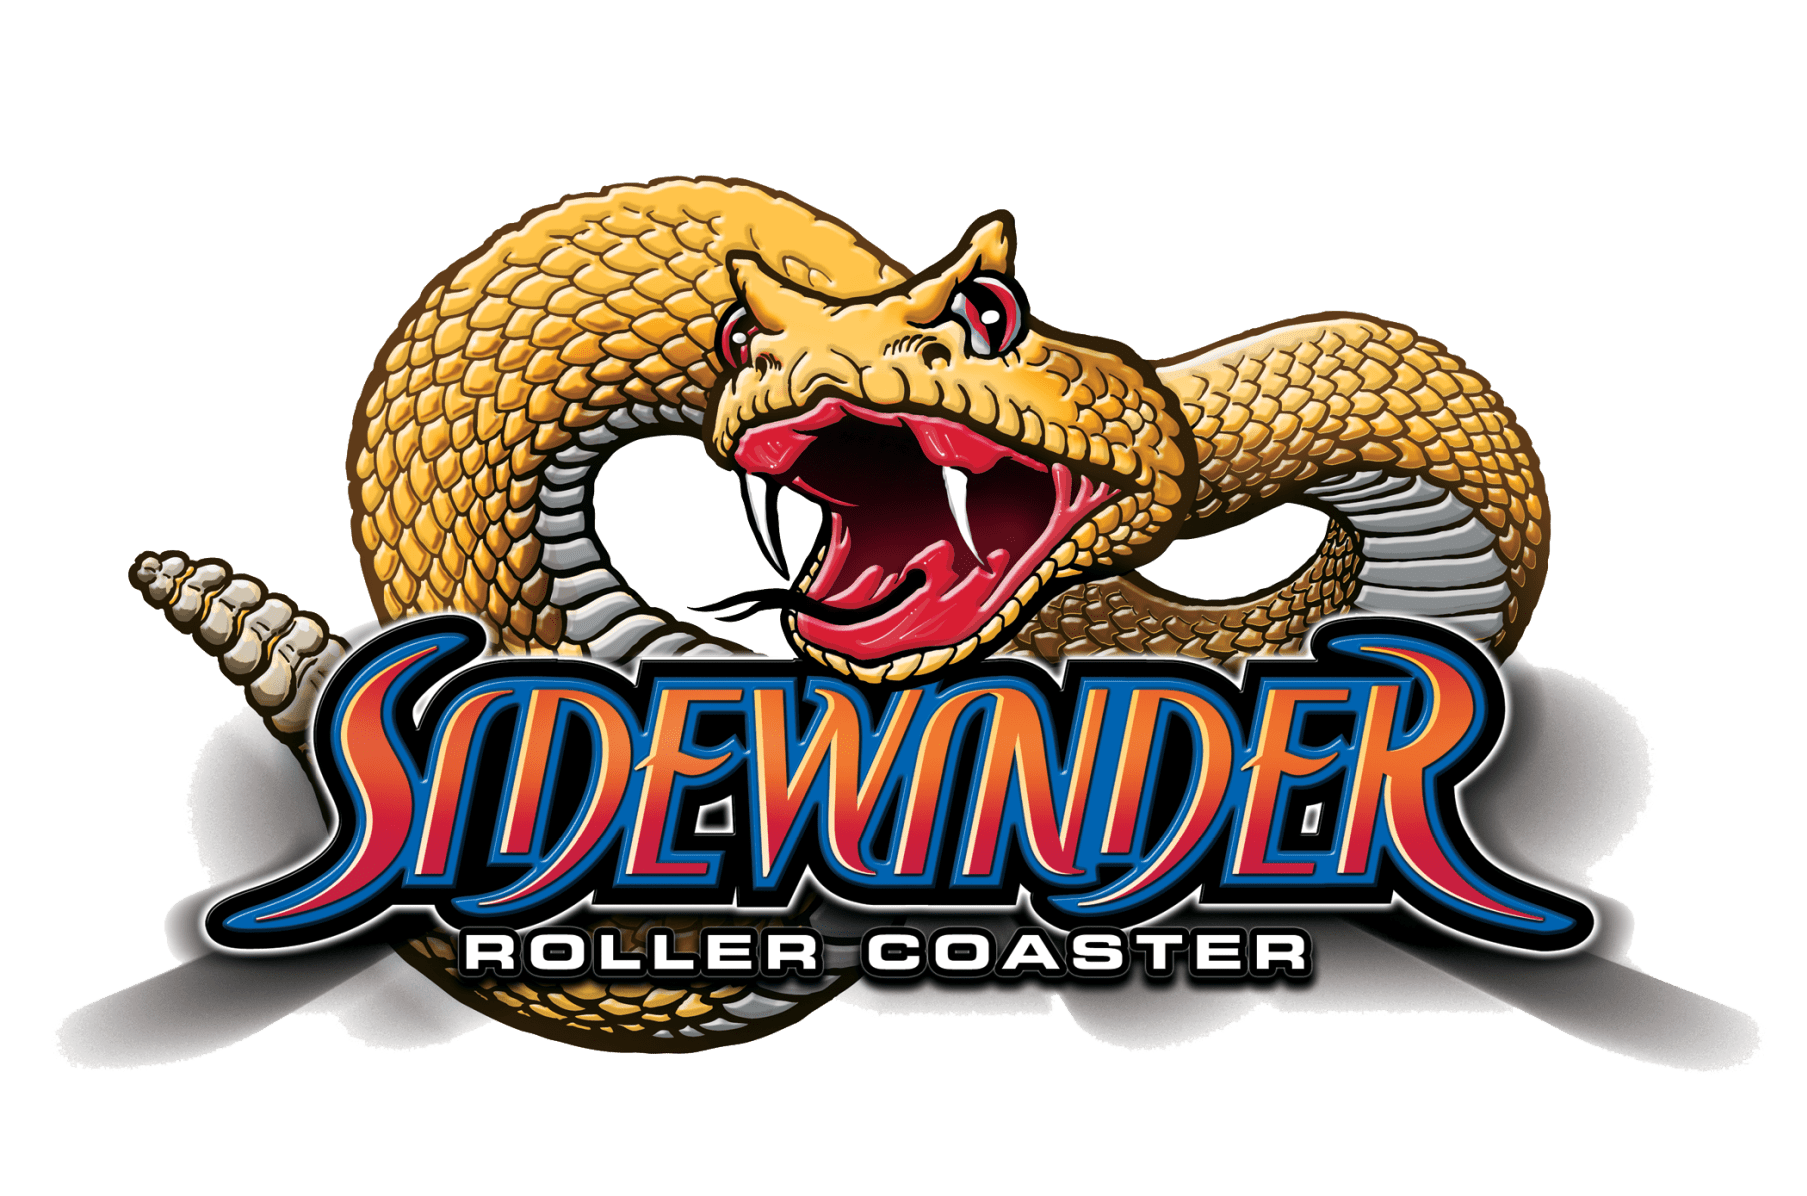 The Sidewinder, LEGO Compatible Looping Coaster | Indiegogo